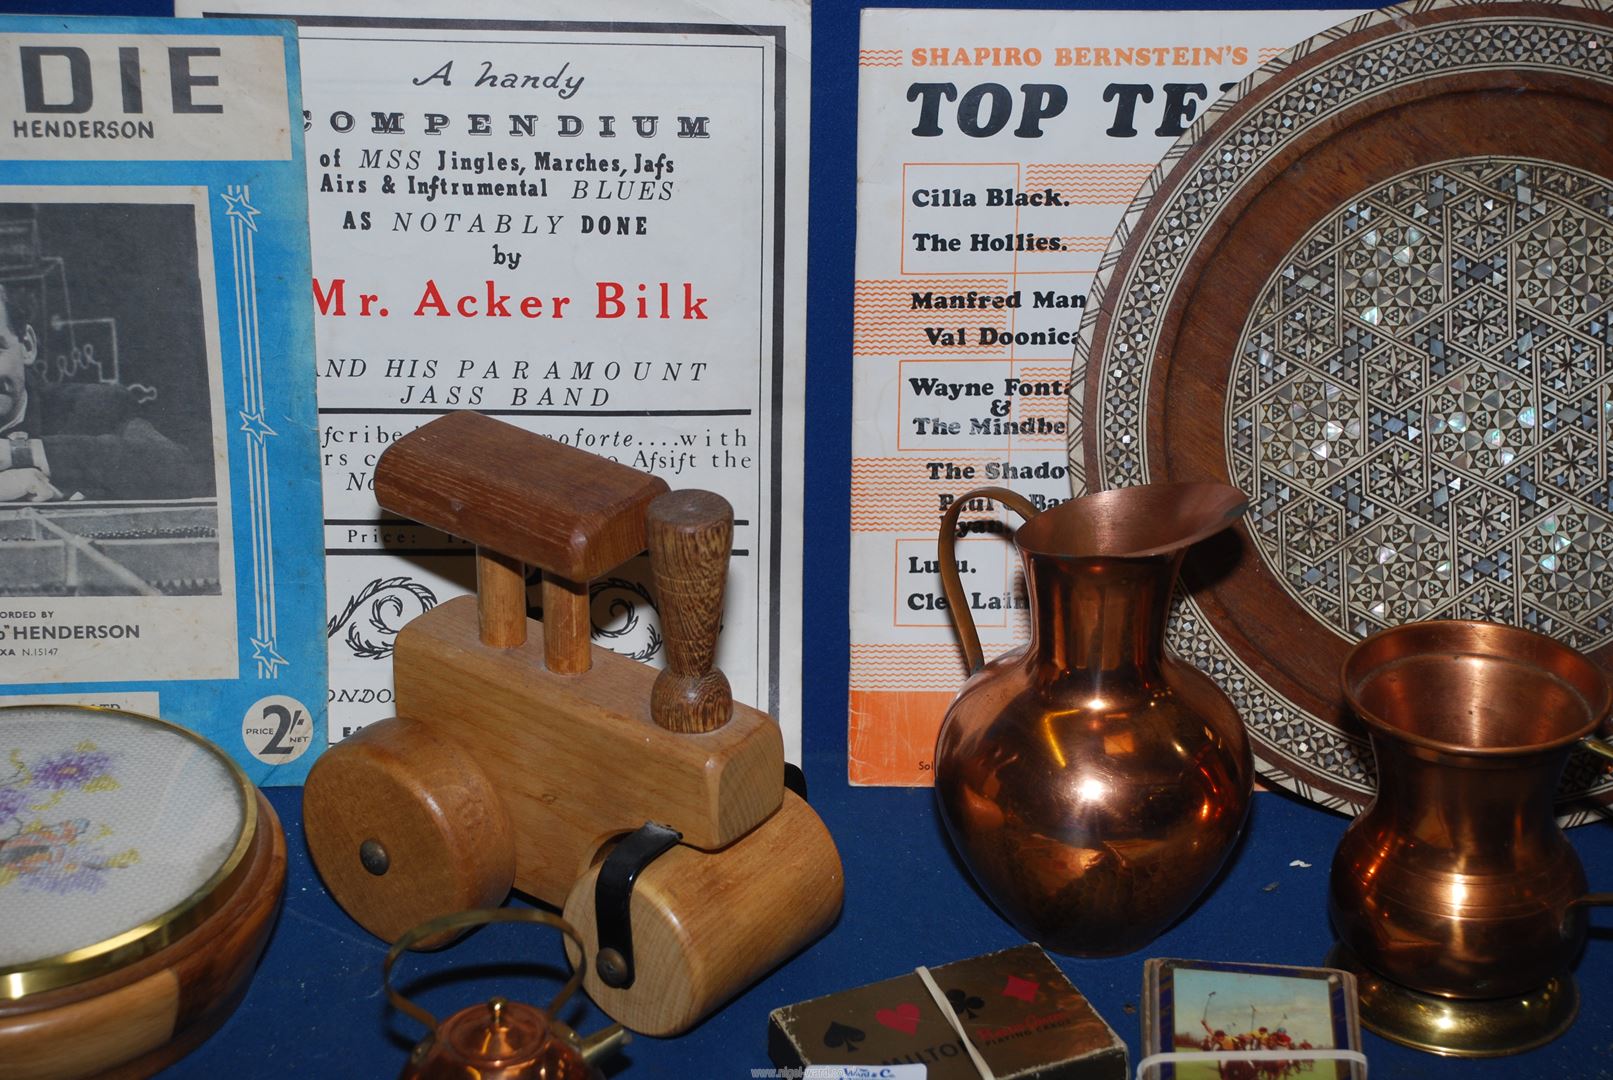 A quantity of miscellanea including small copper ornaments, tankard, jug, treen toy tractor, - Image 3 of 3